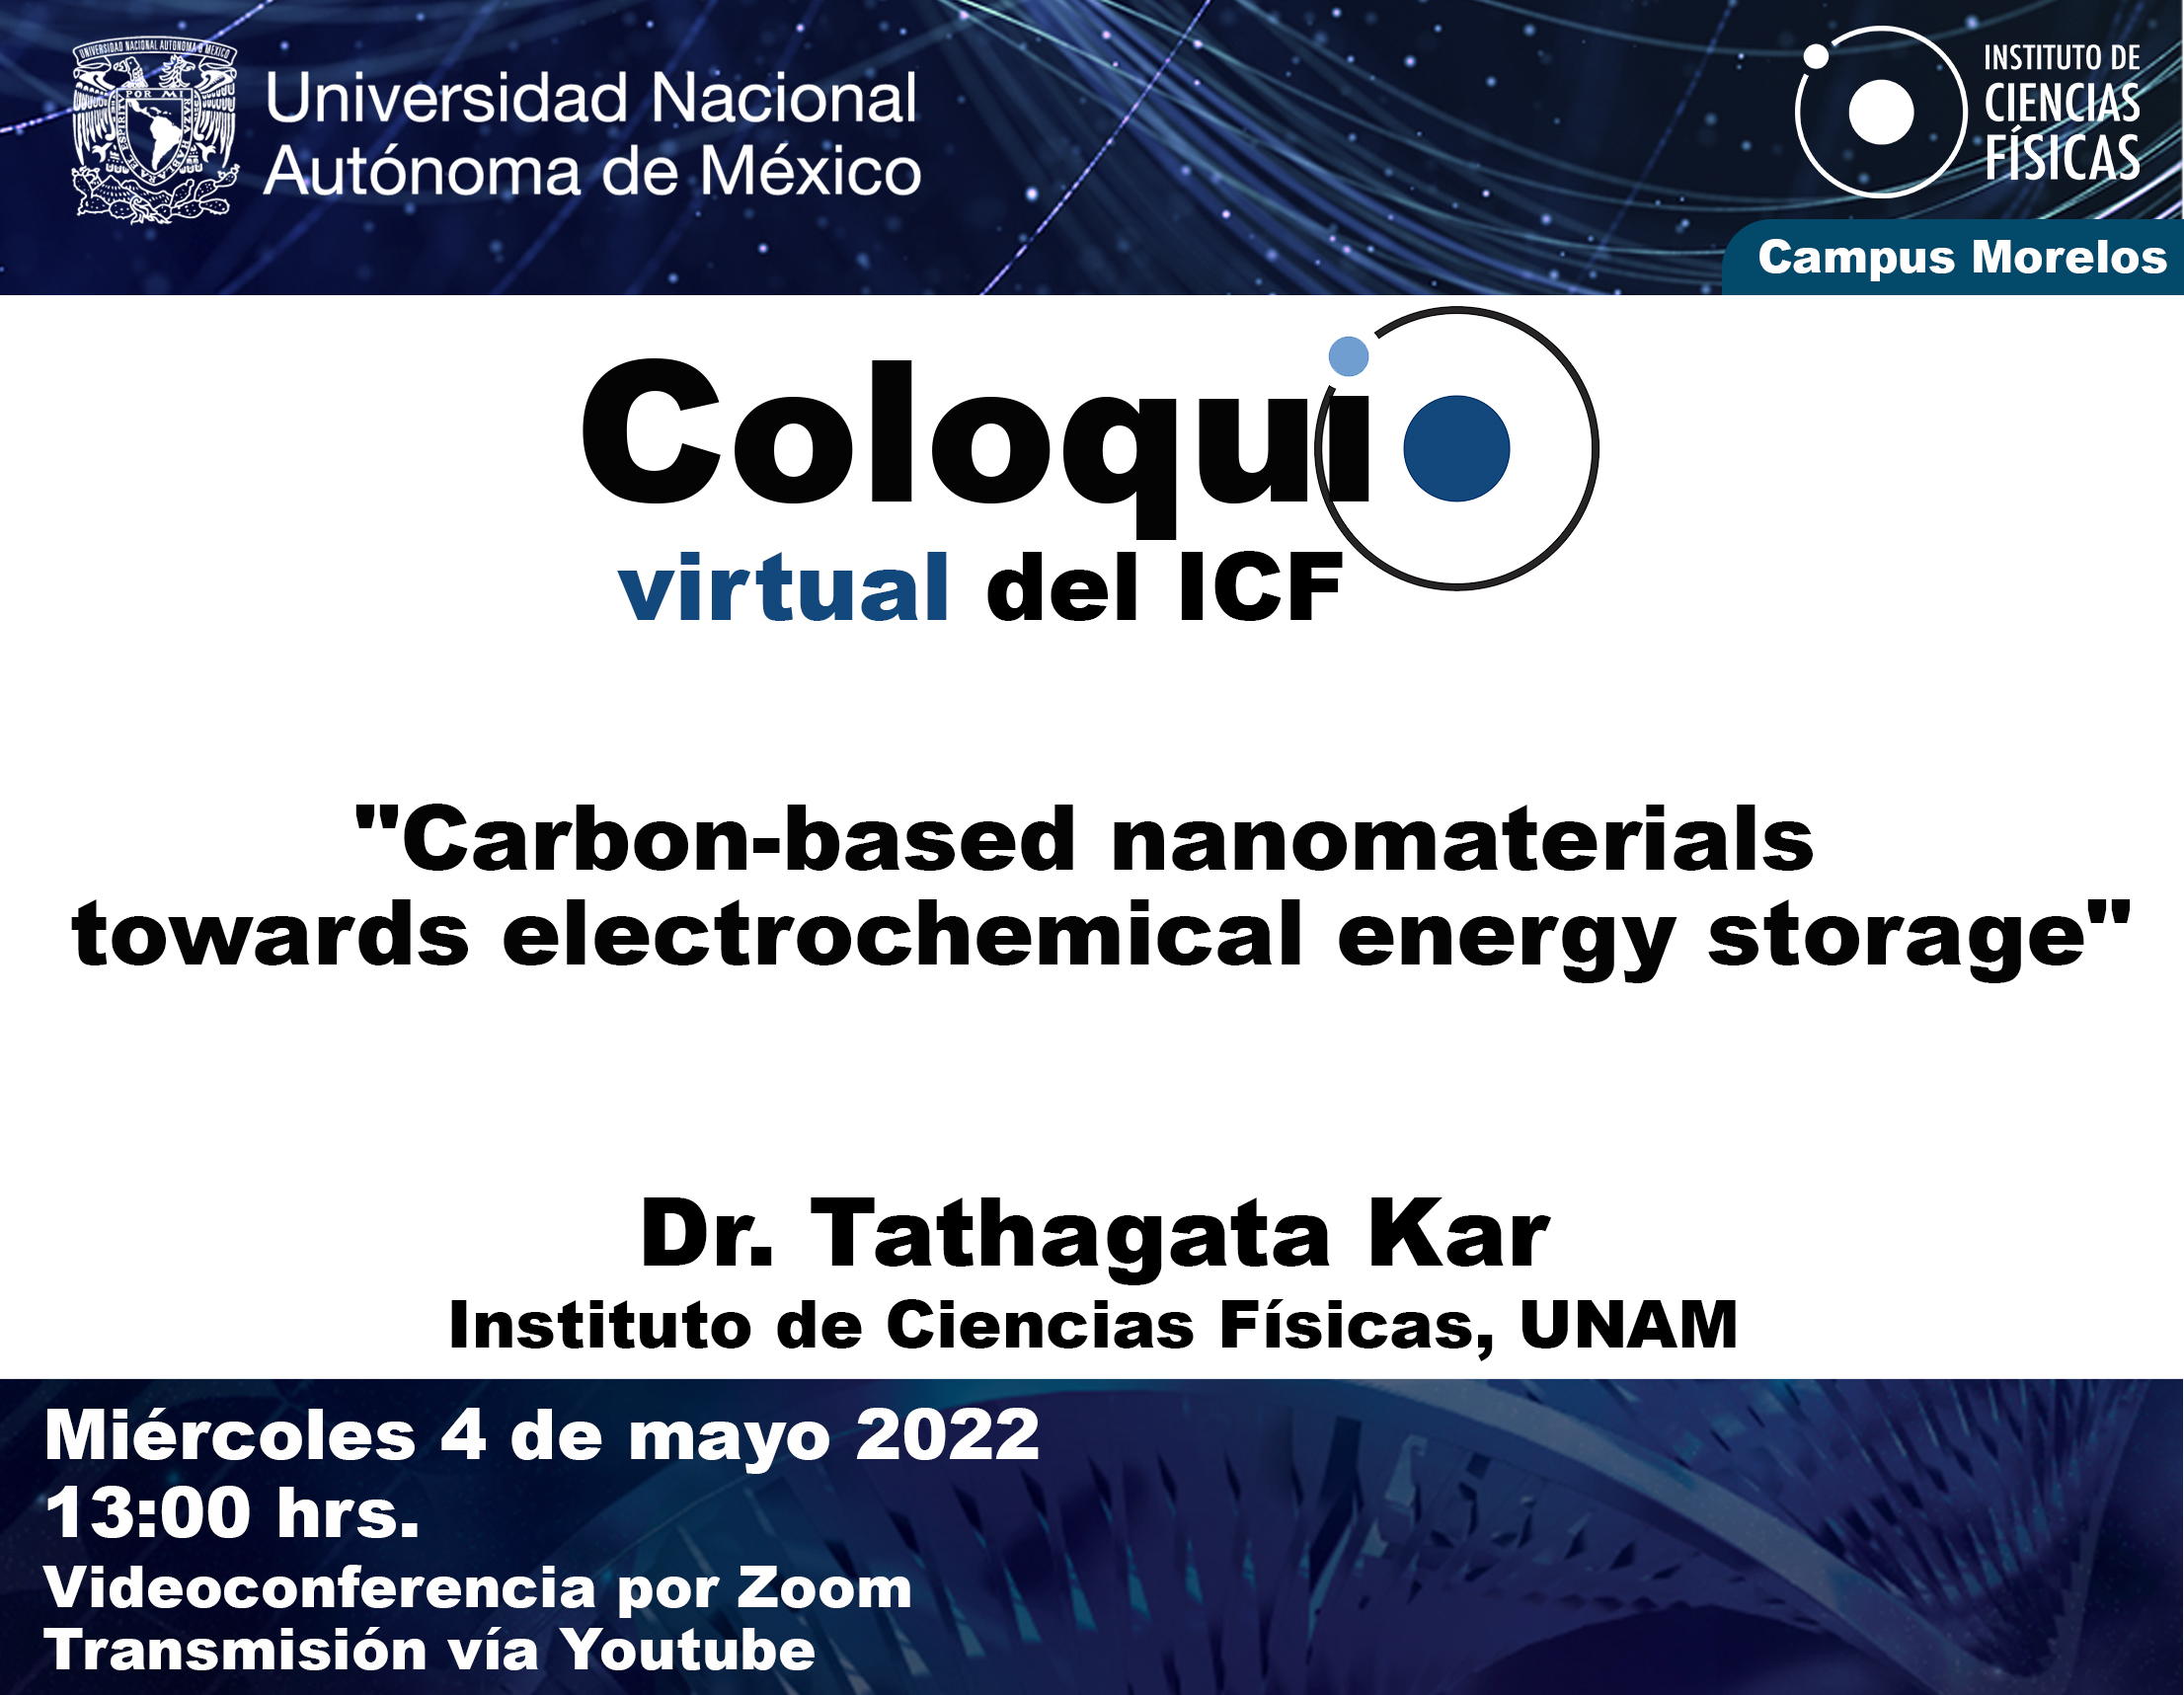 "Carbon-based nanomaterials towards electrochemical energy storage"